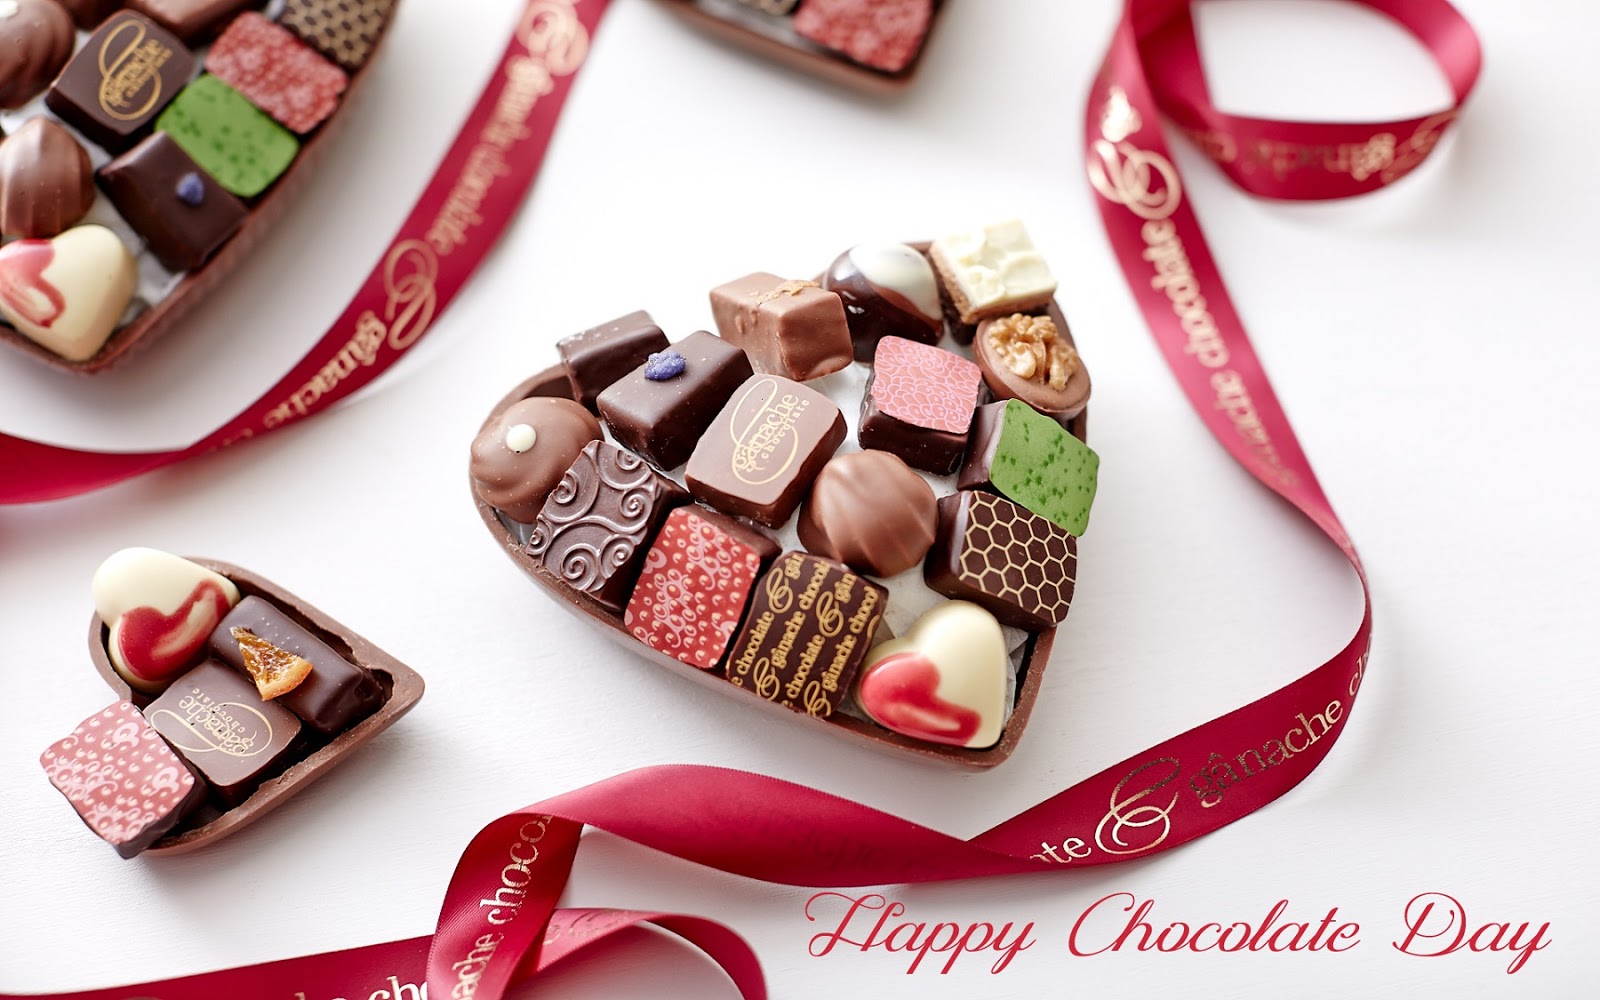 Happy Chocolate Day wishes 2018